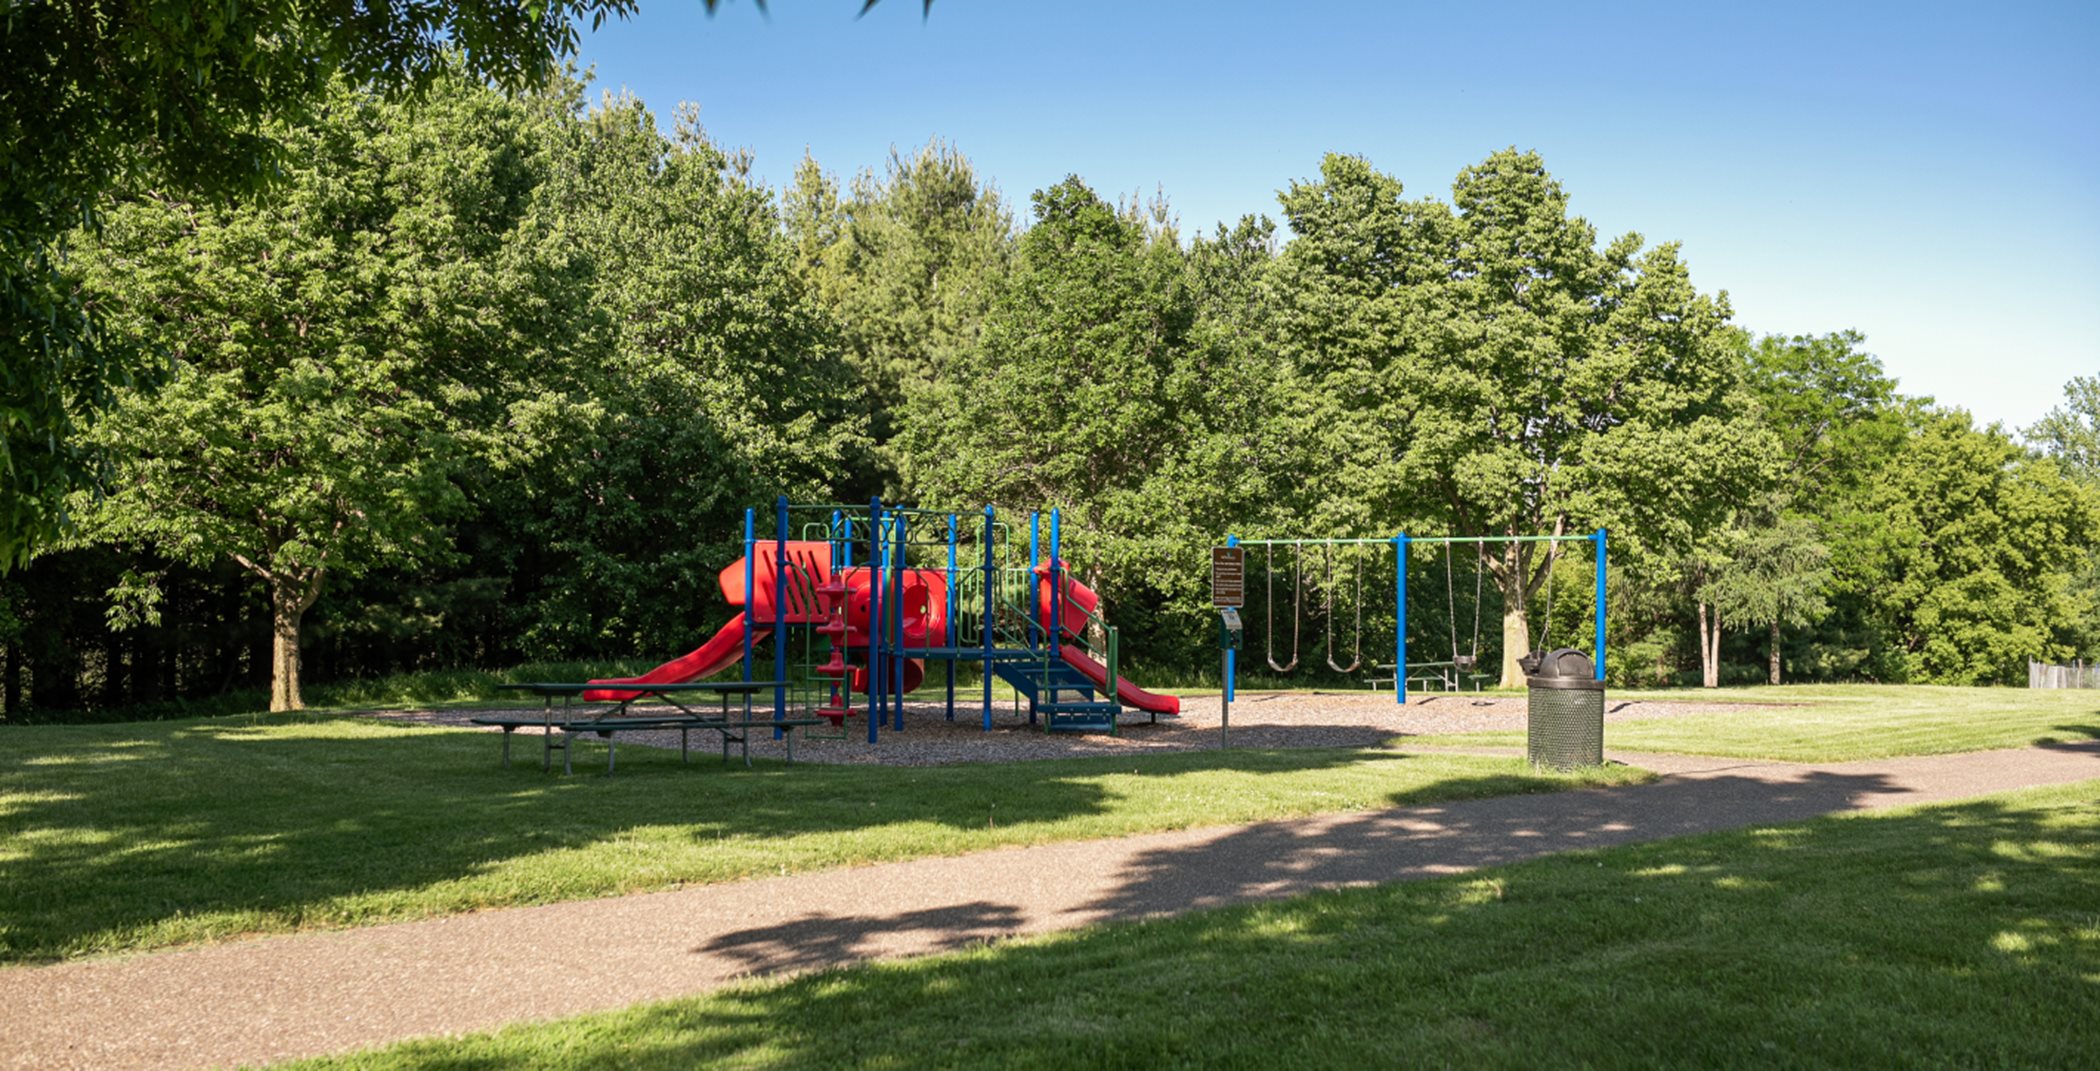 Woodbury playgrounds